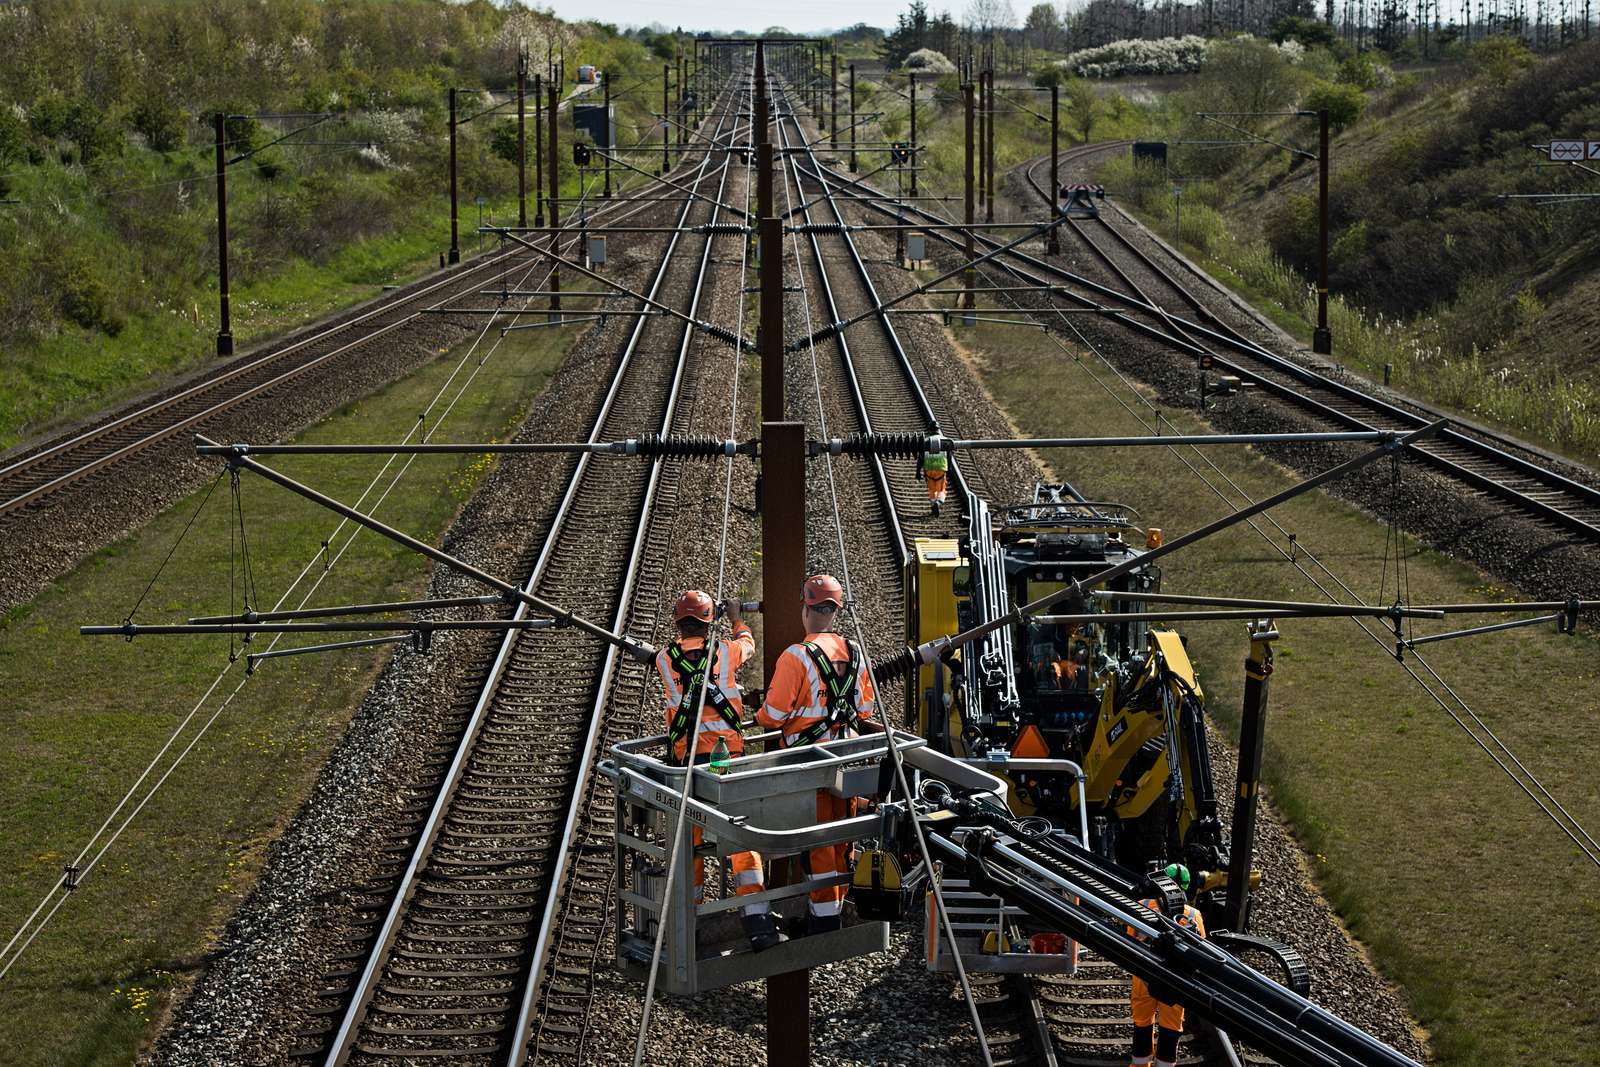 Rail work on the Storebælt railway